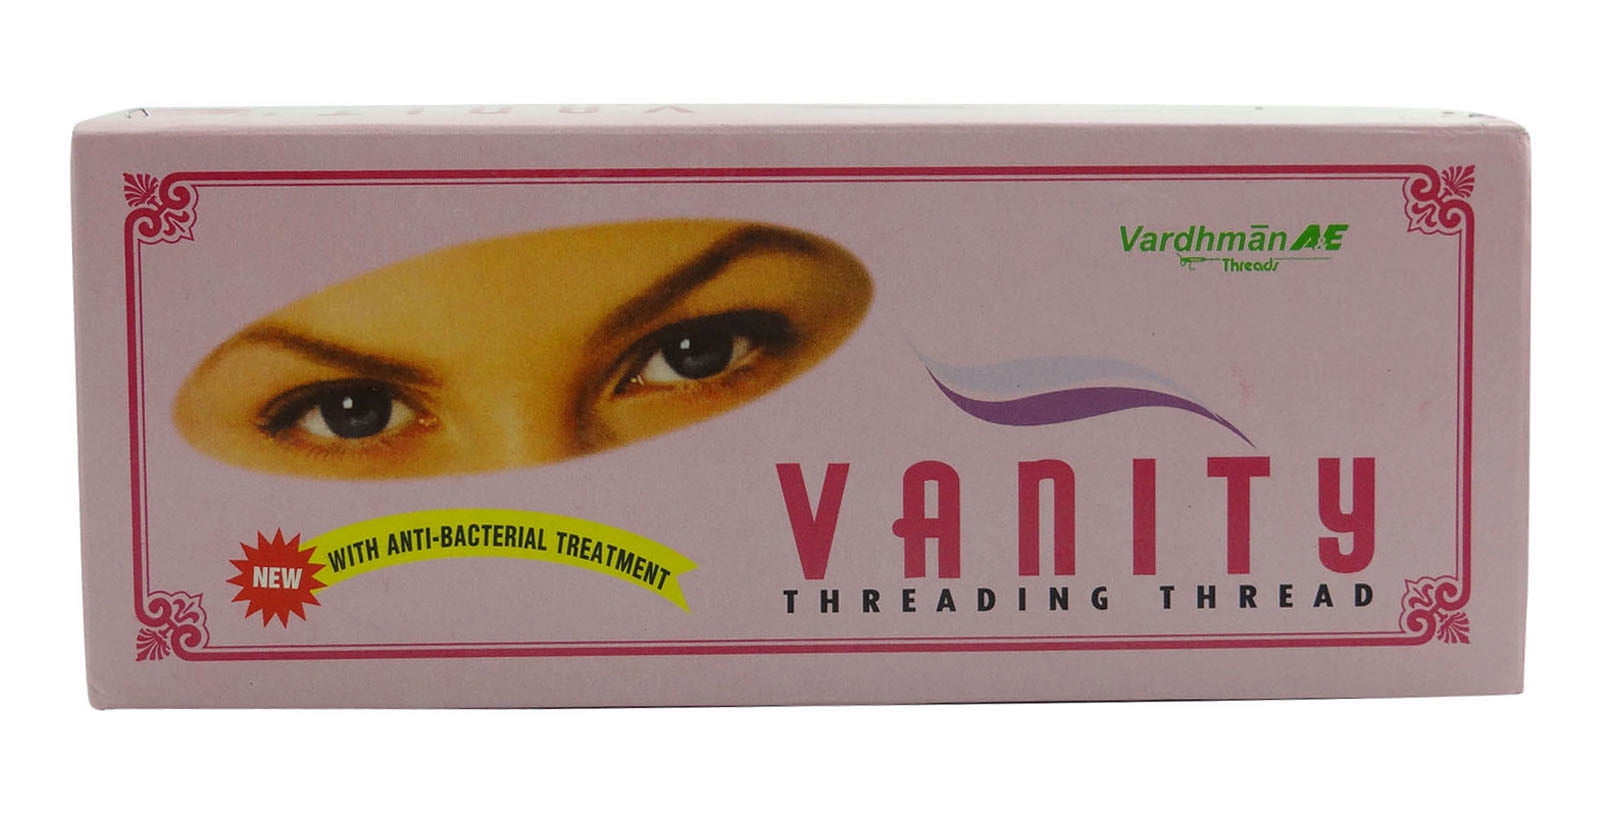 Vanity Eyebrow Cotton Threading Thread With Antiseptic Treatment